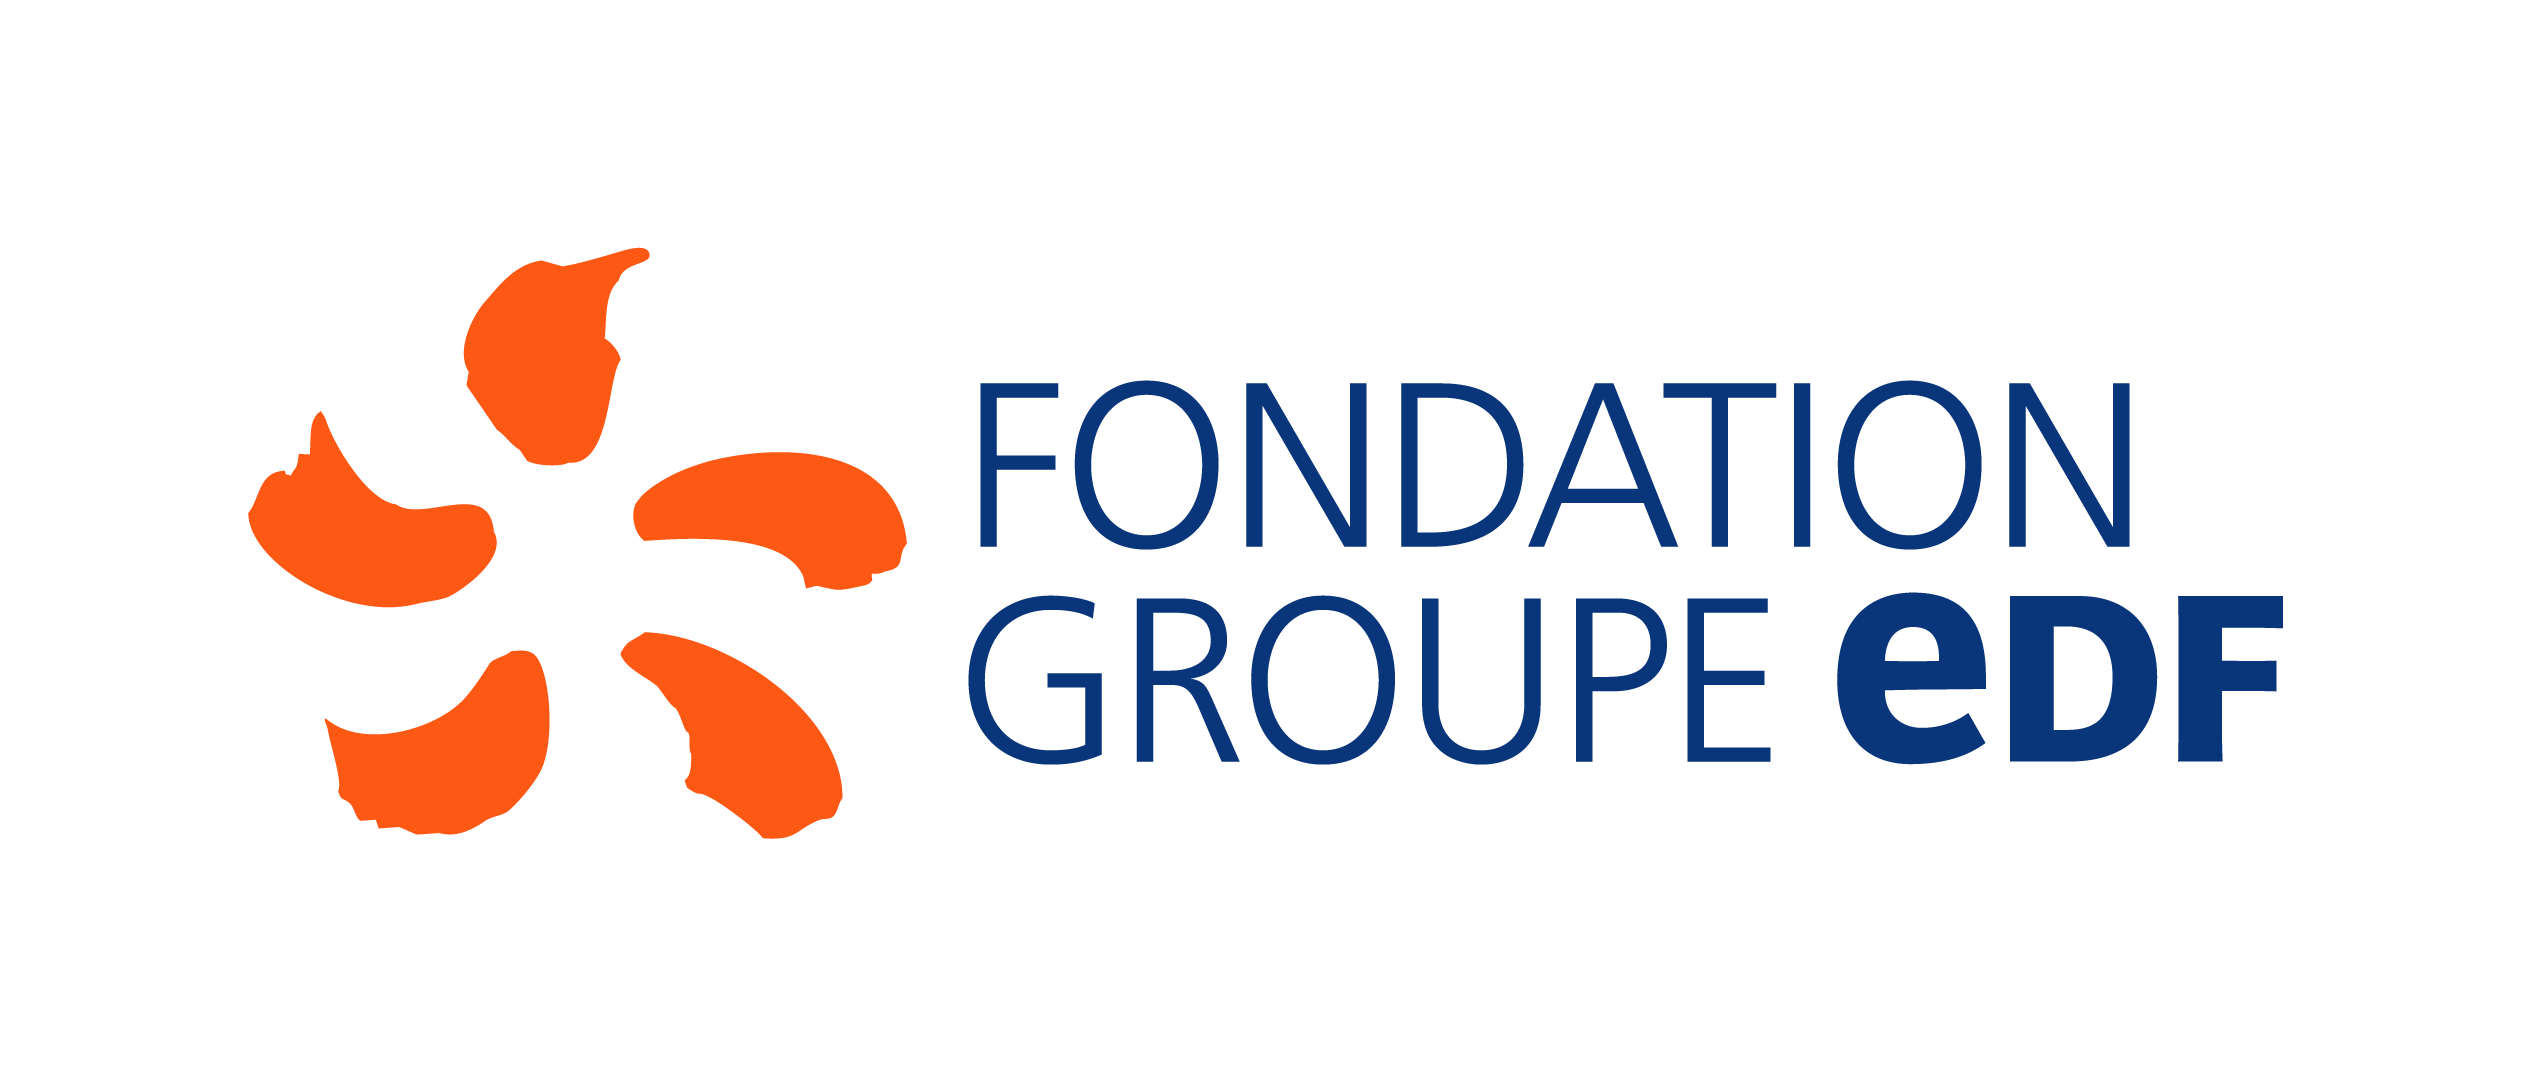 logo-fondation-groupe-edf-rvb.png